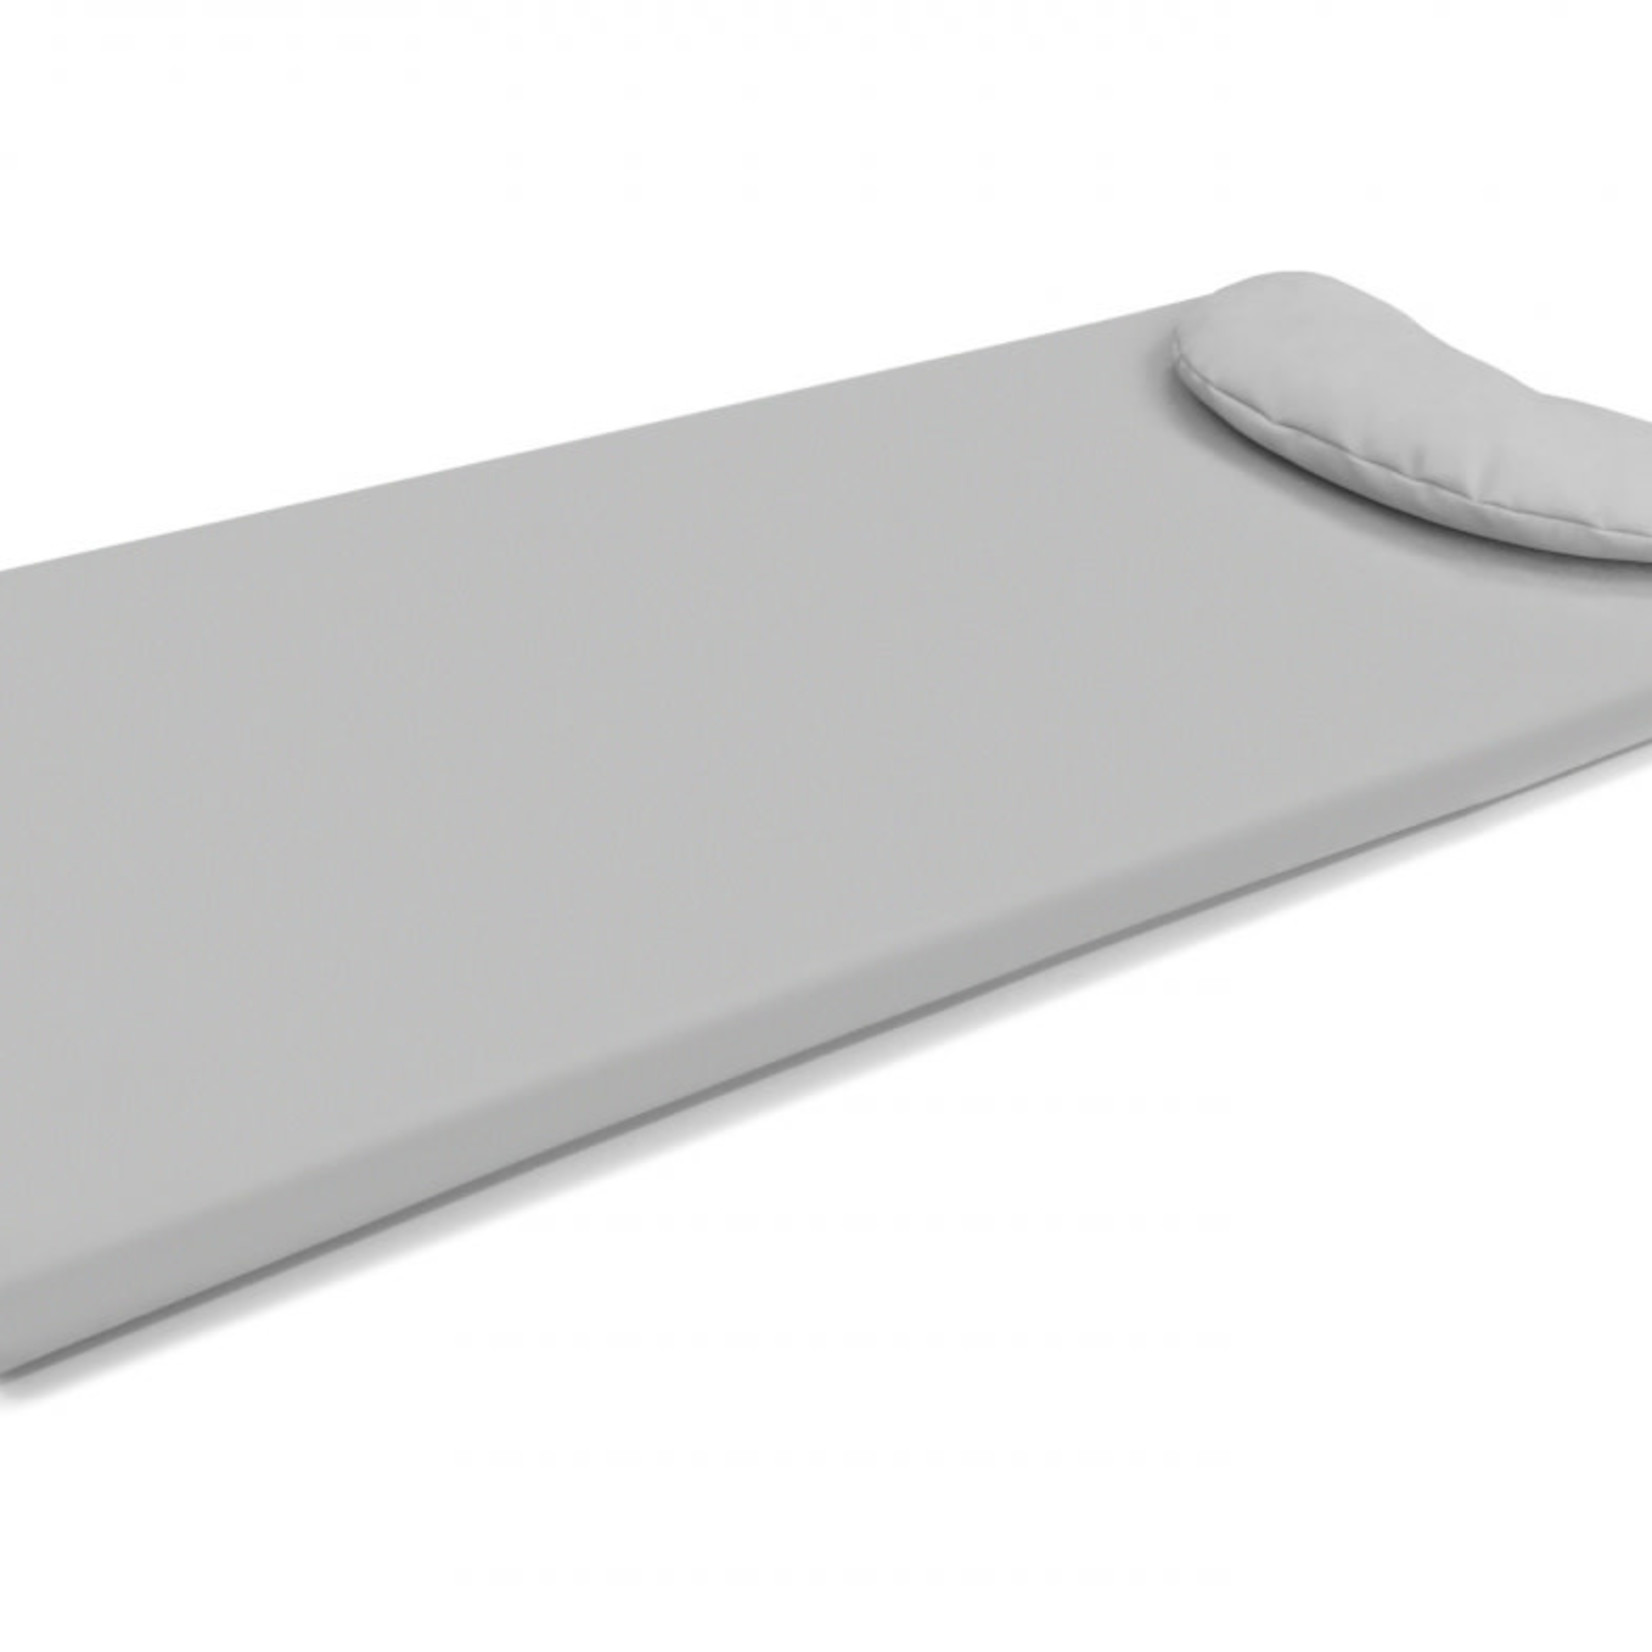 Boori Soft Lux Change Pad 39.5cm-Grey